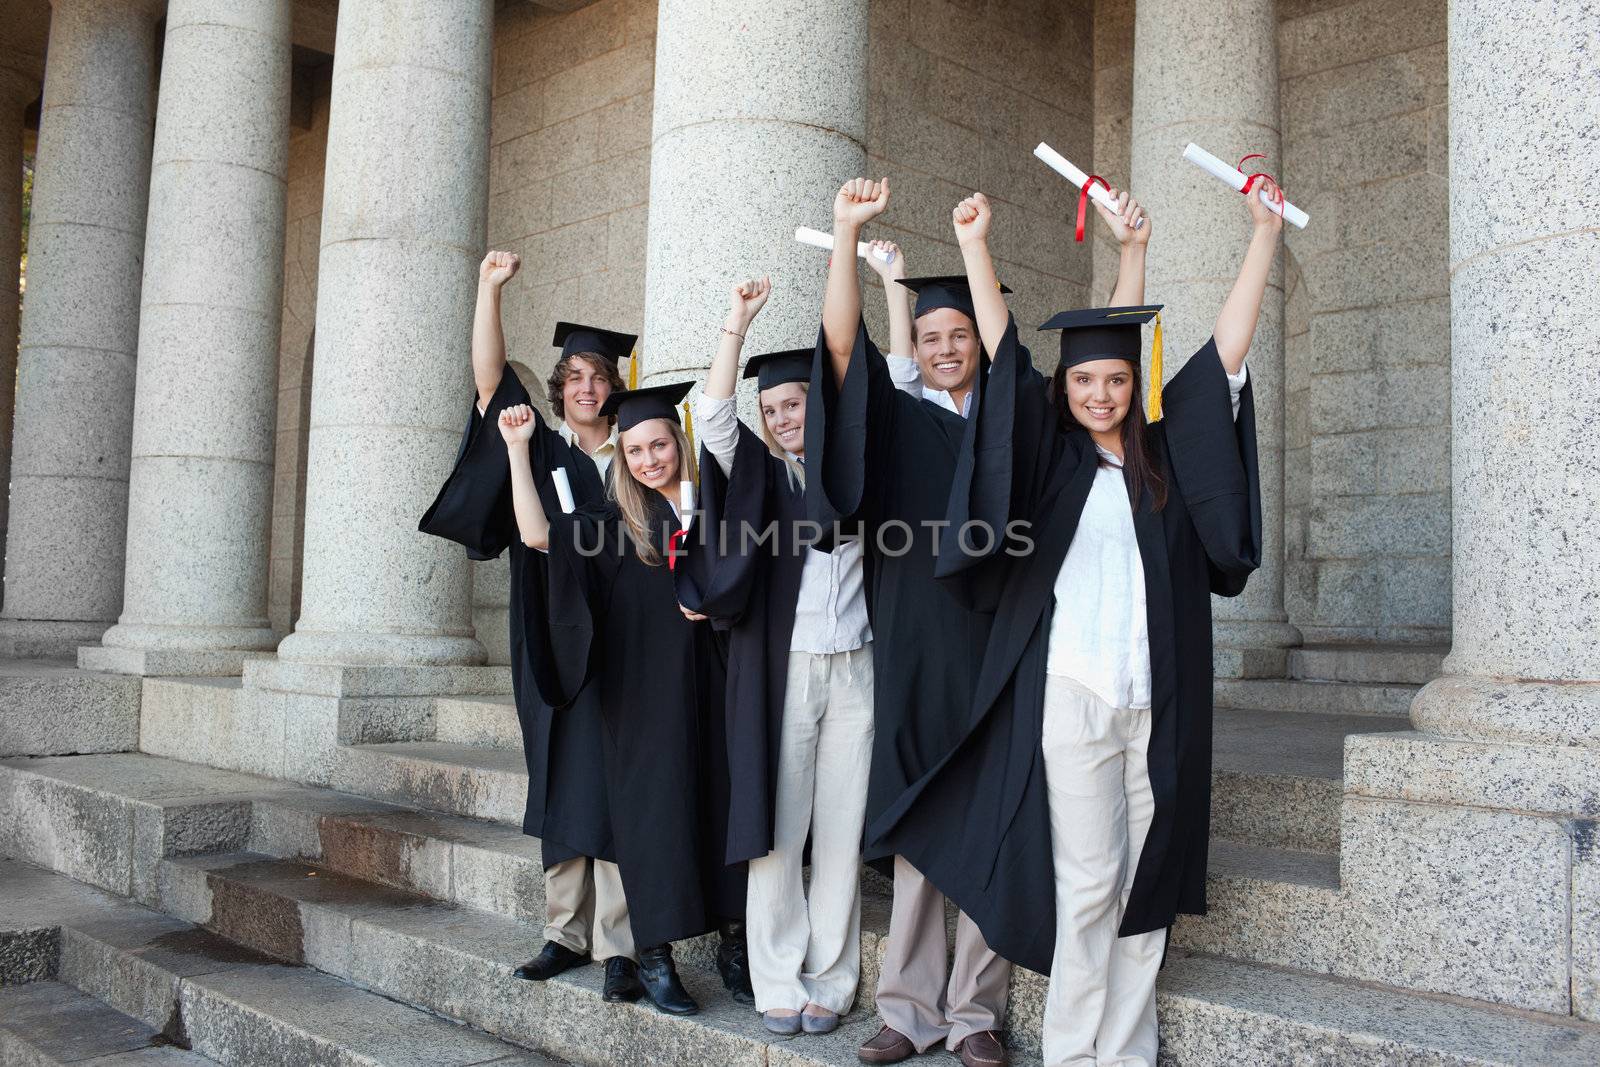 Five happy graduates posing the arms raised by Wavebreakmedia